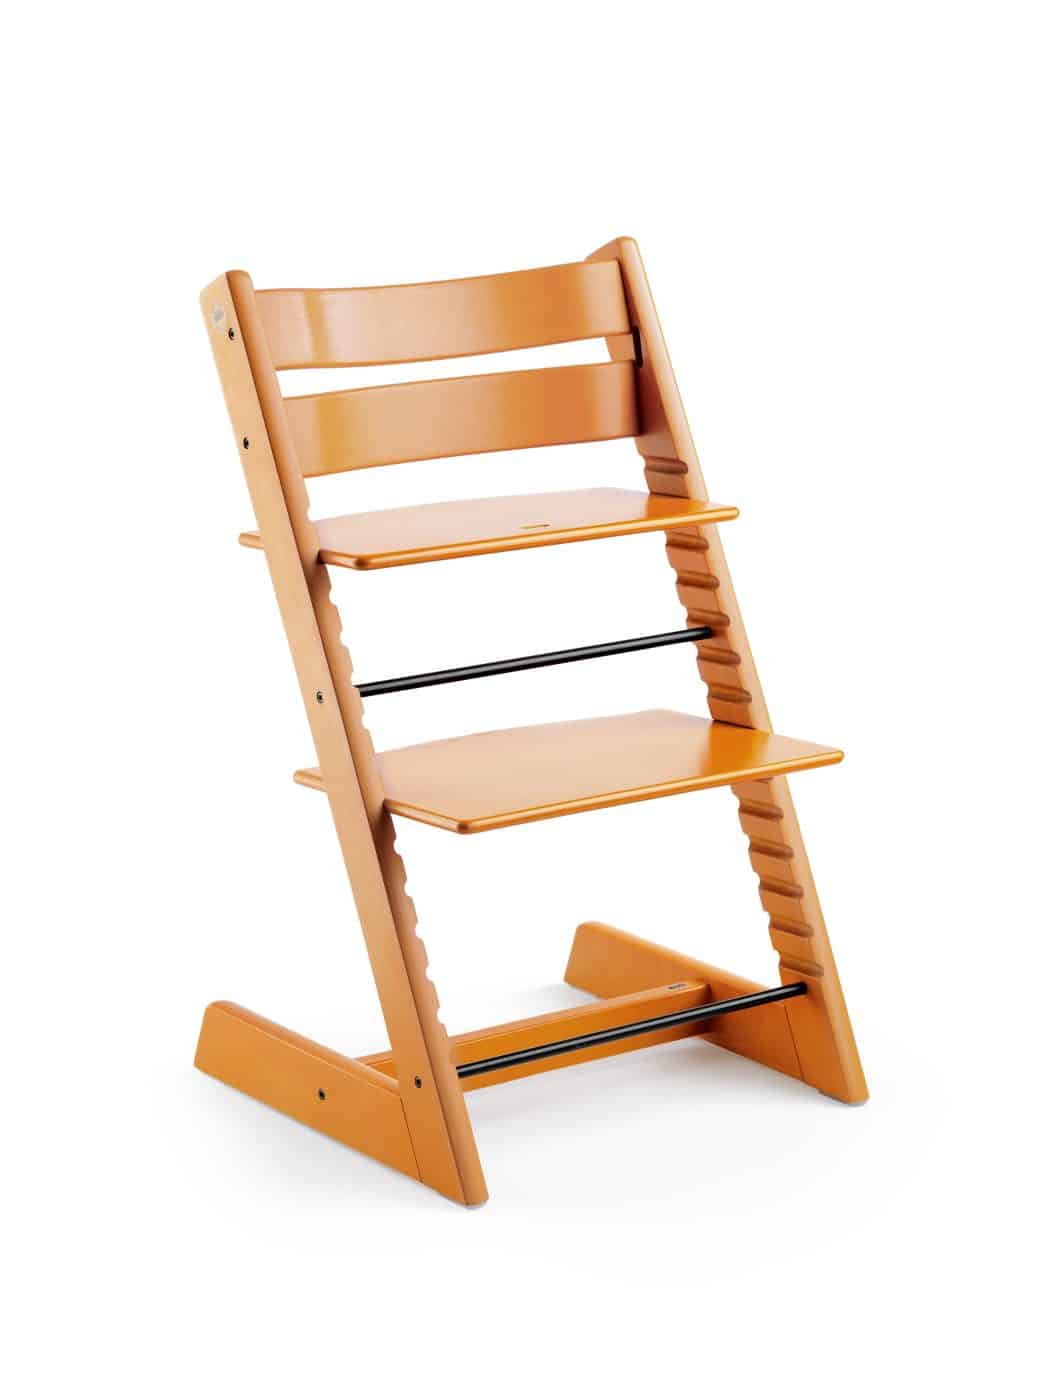 An adjustable wooden chair by Norwegian designer PETER OPSVIK